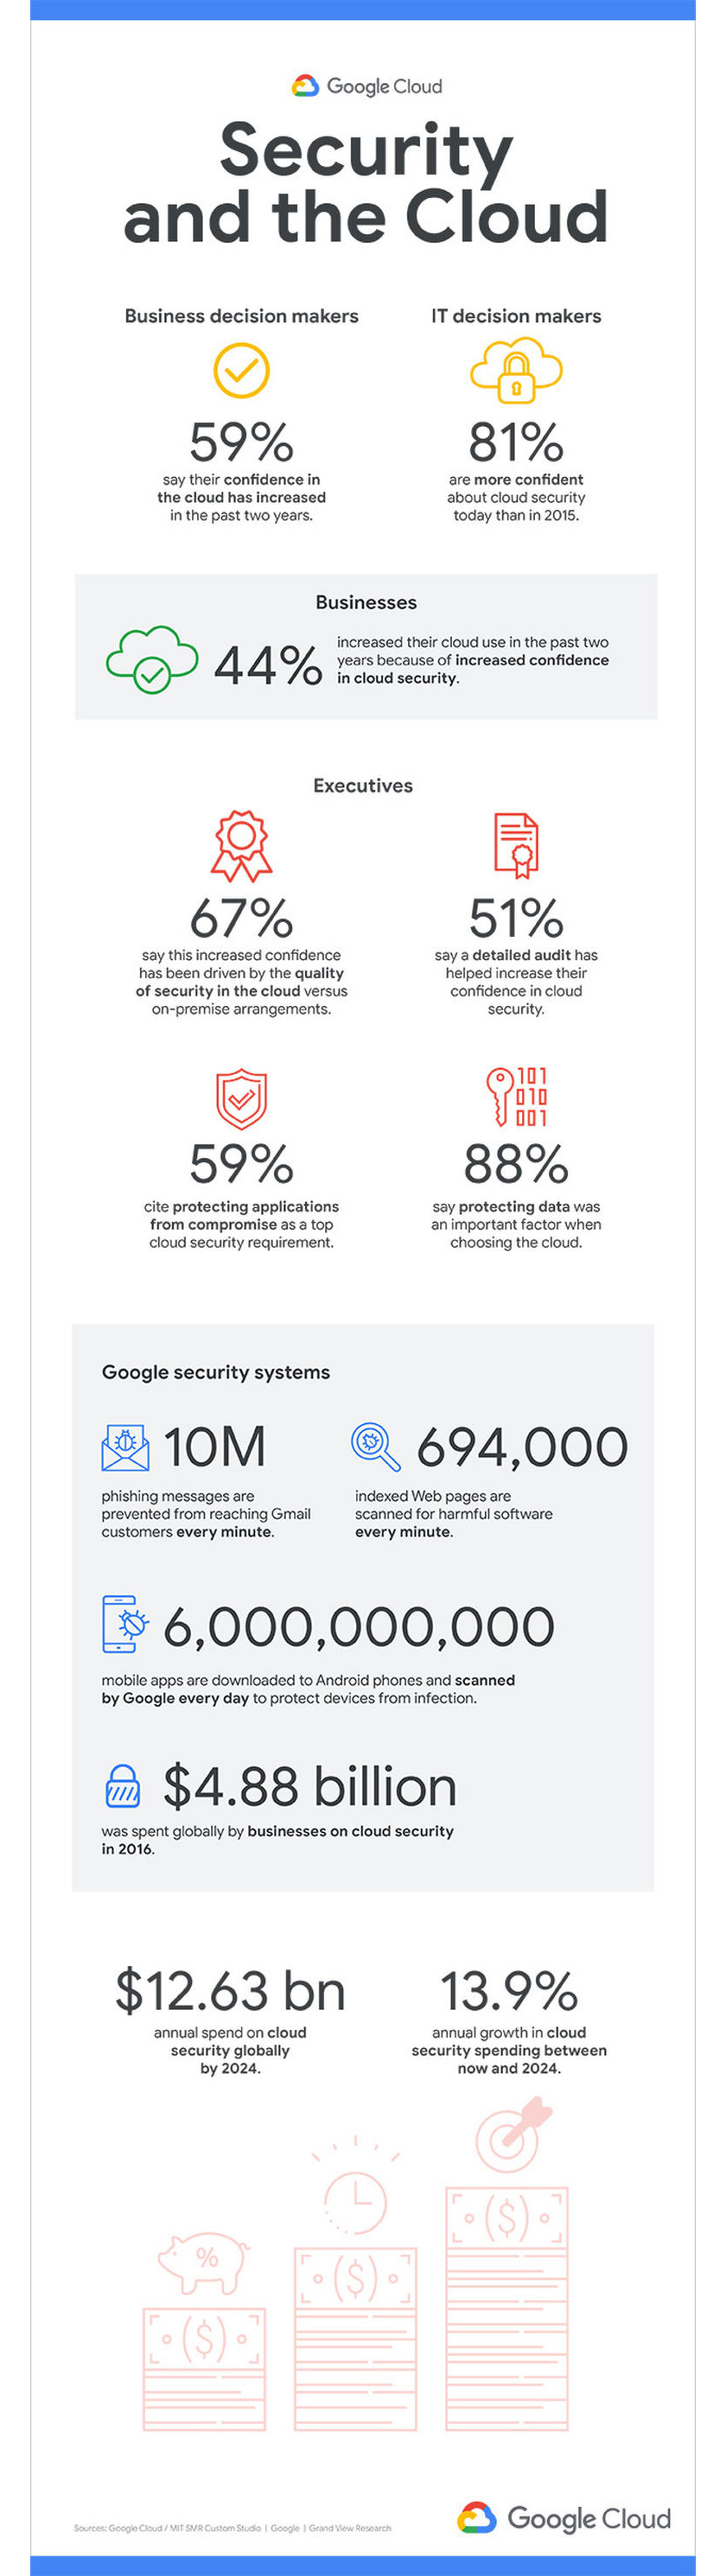 GoogleCloud_Security_Cloud_infographic_1-2